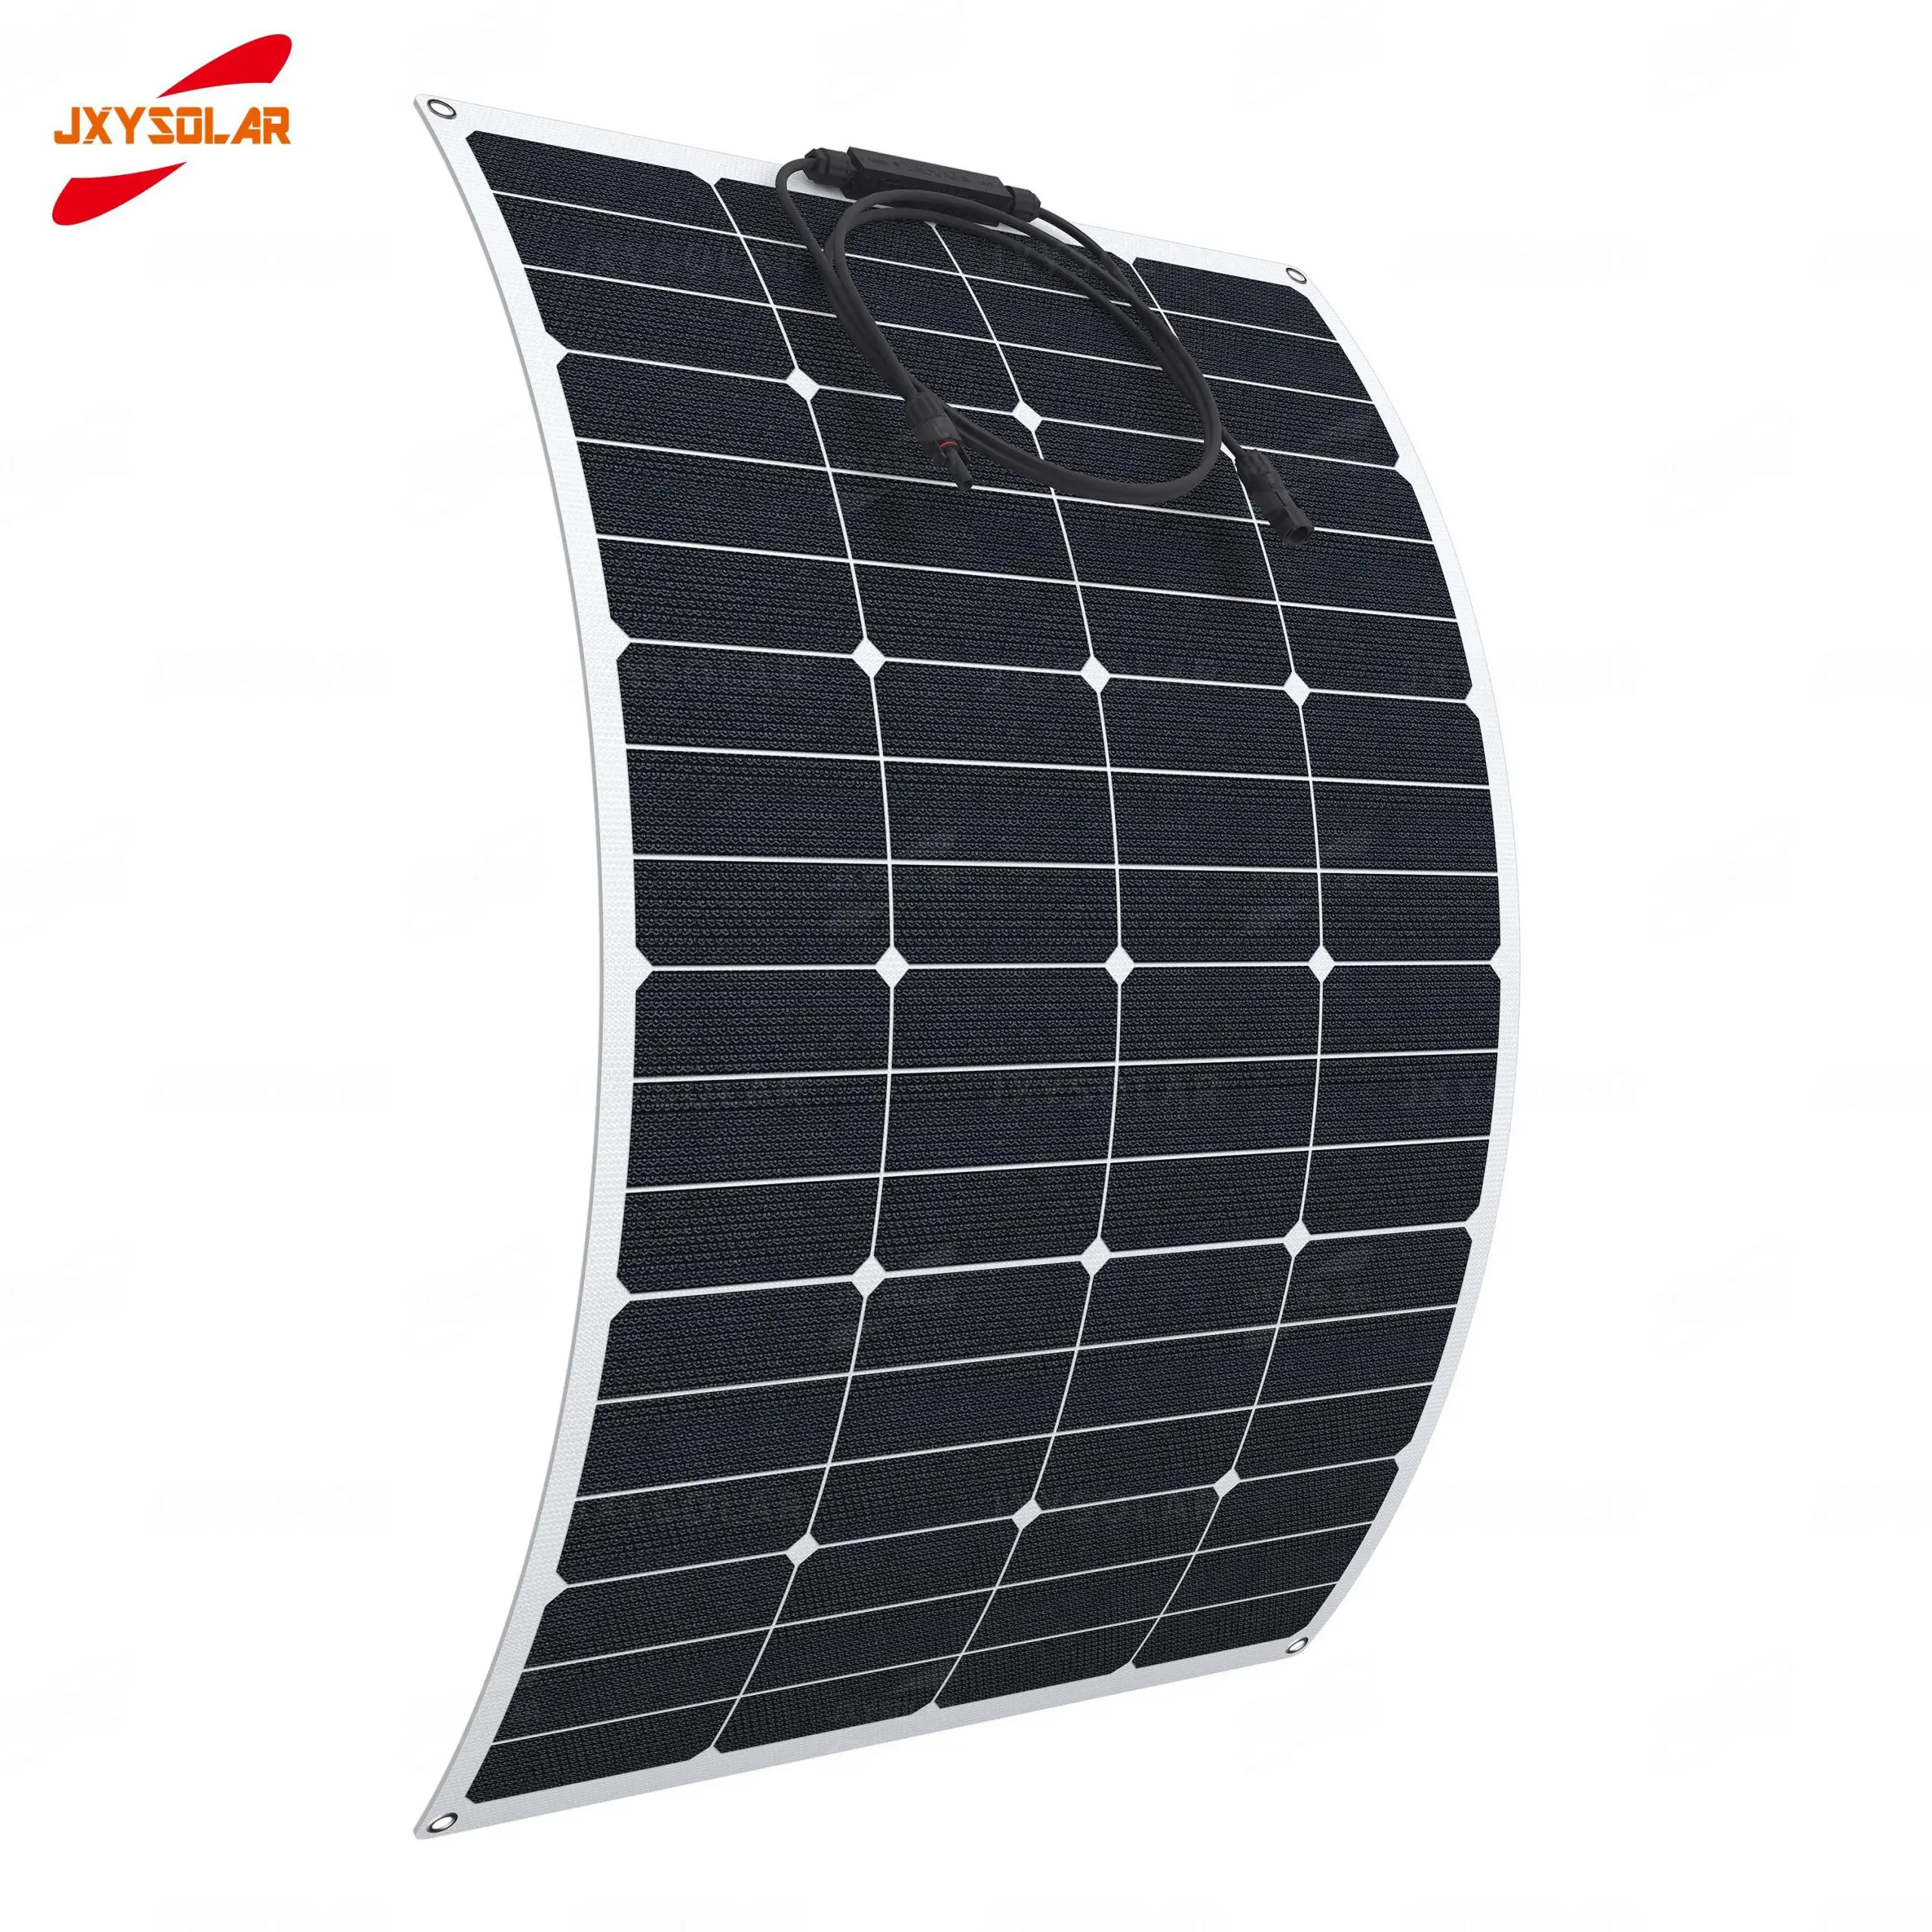 Resonable Price Hot Sale 80W Sunpower Cells Portable Flexible Solar ...